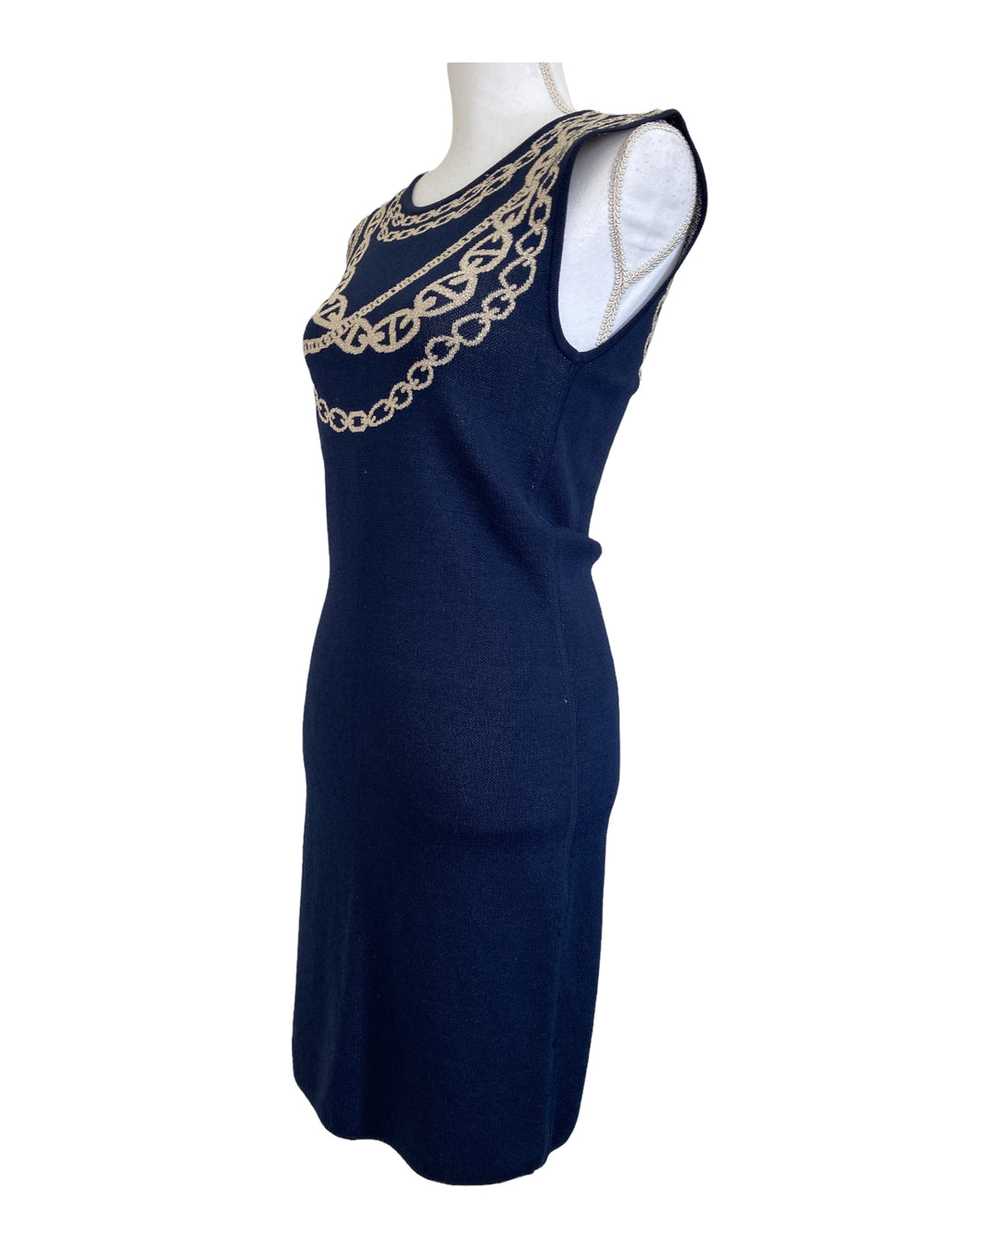 Adrienne Vittadini Navy Knit Dress, S - image 4